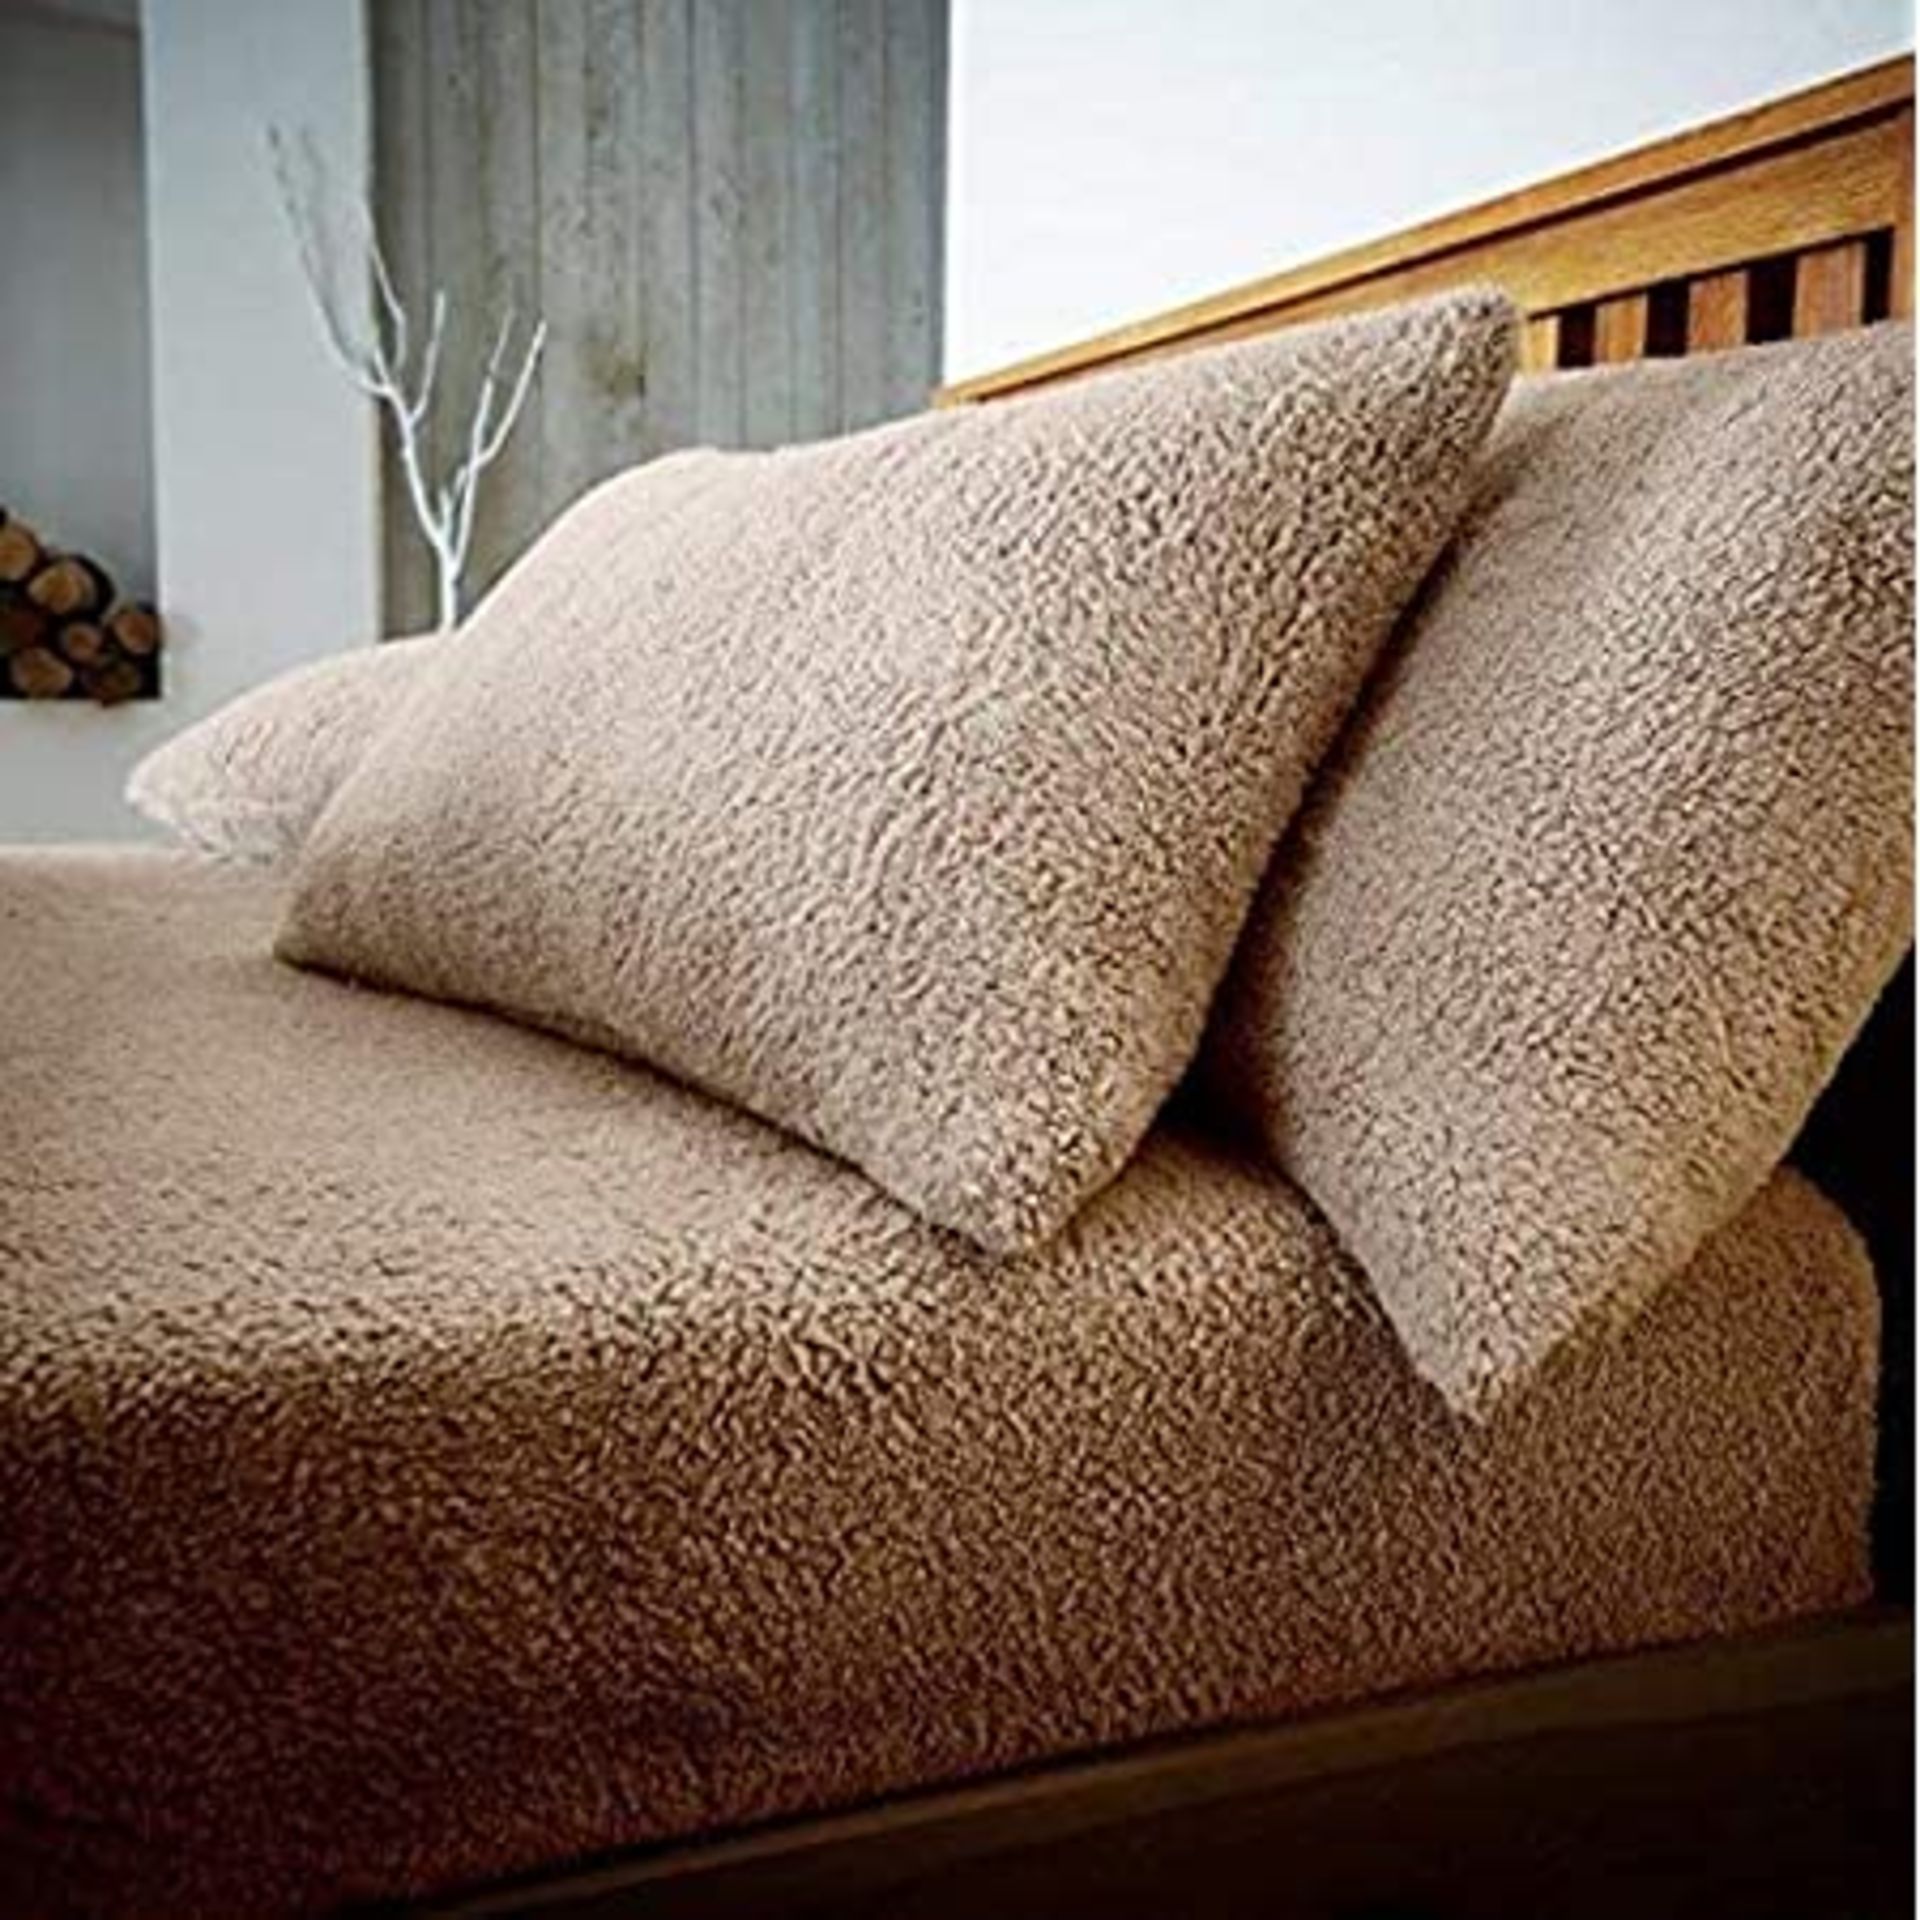 RRP-£16 Sleepdown Teddy Fleece Fitted Sheet Plain Thermal Warm Cosy Super Soft Bedsheet Bed Linen -